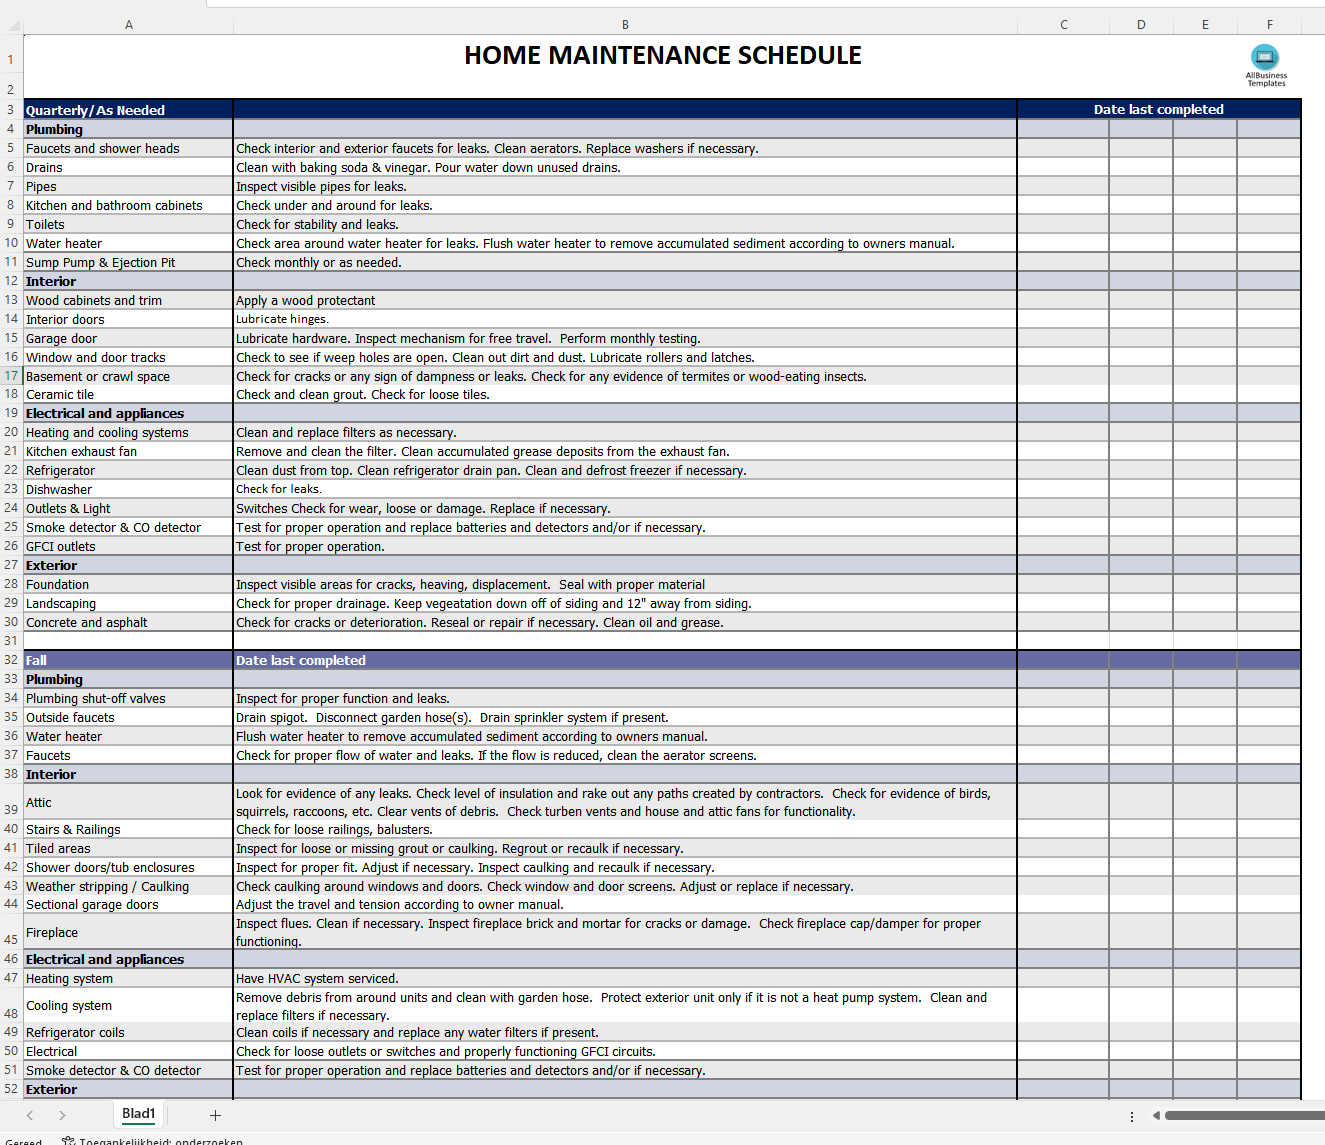 Printable Home Maintenance Schedule | Templates at allbusinesstemplates.com